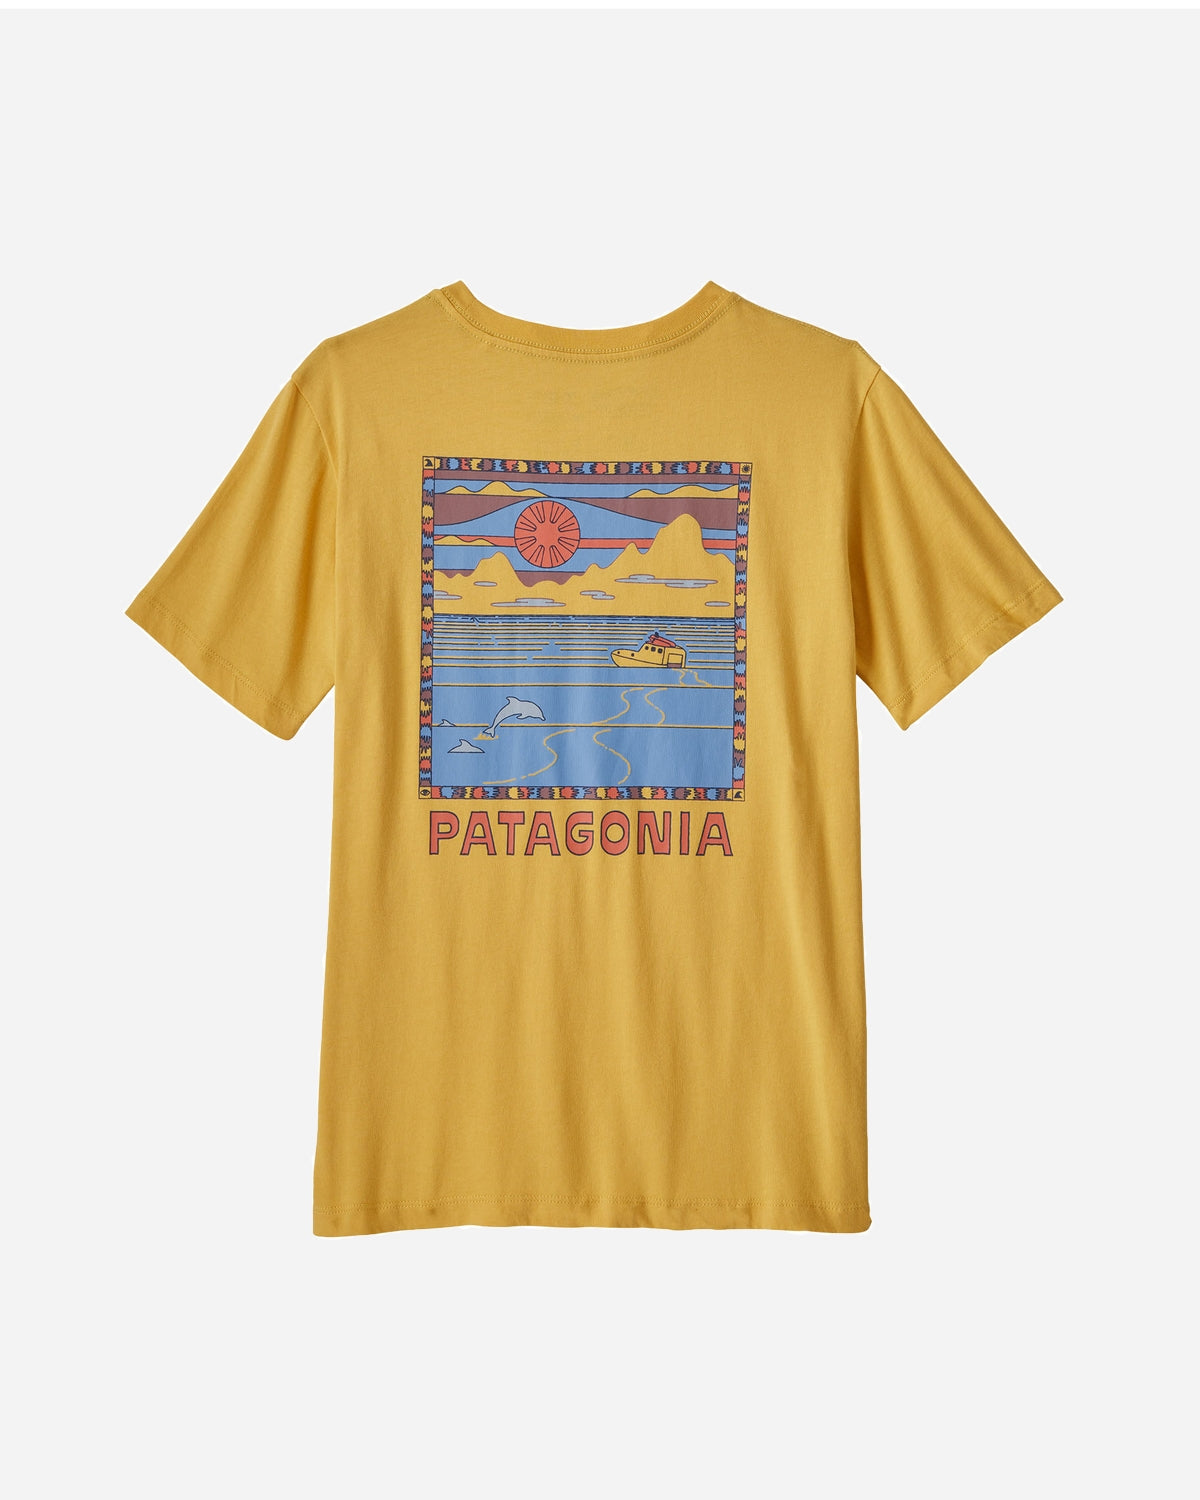 Teens Regenerative Graphic T-Shirt - Summit Swell/Surfboard Yellow - Patagonia - Munkstore.dk